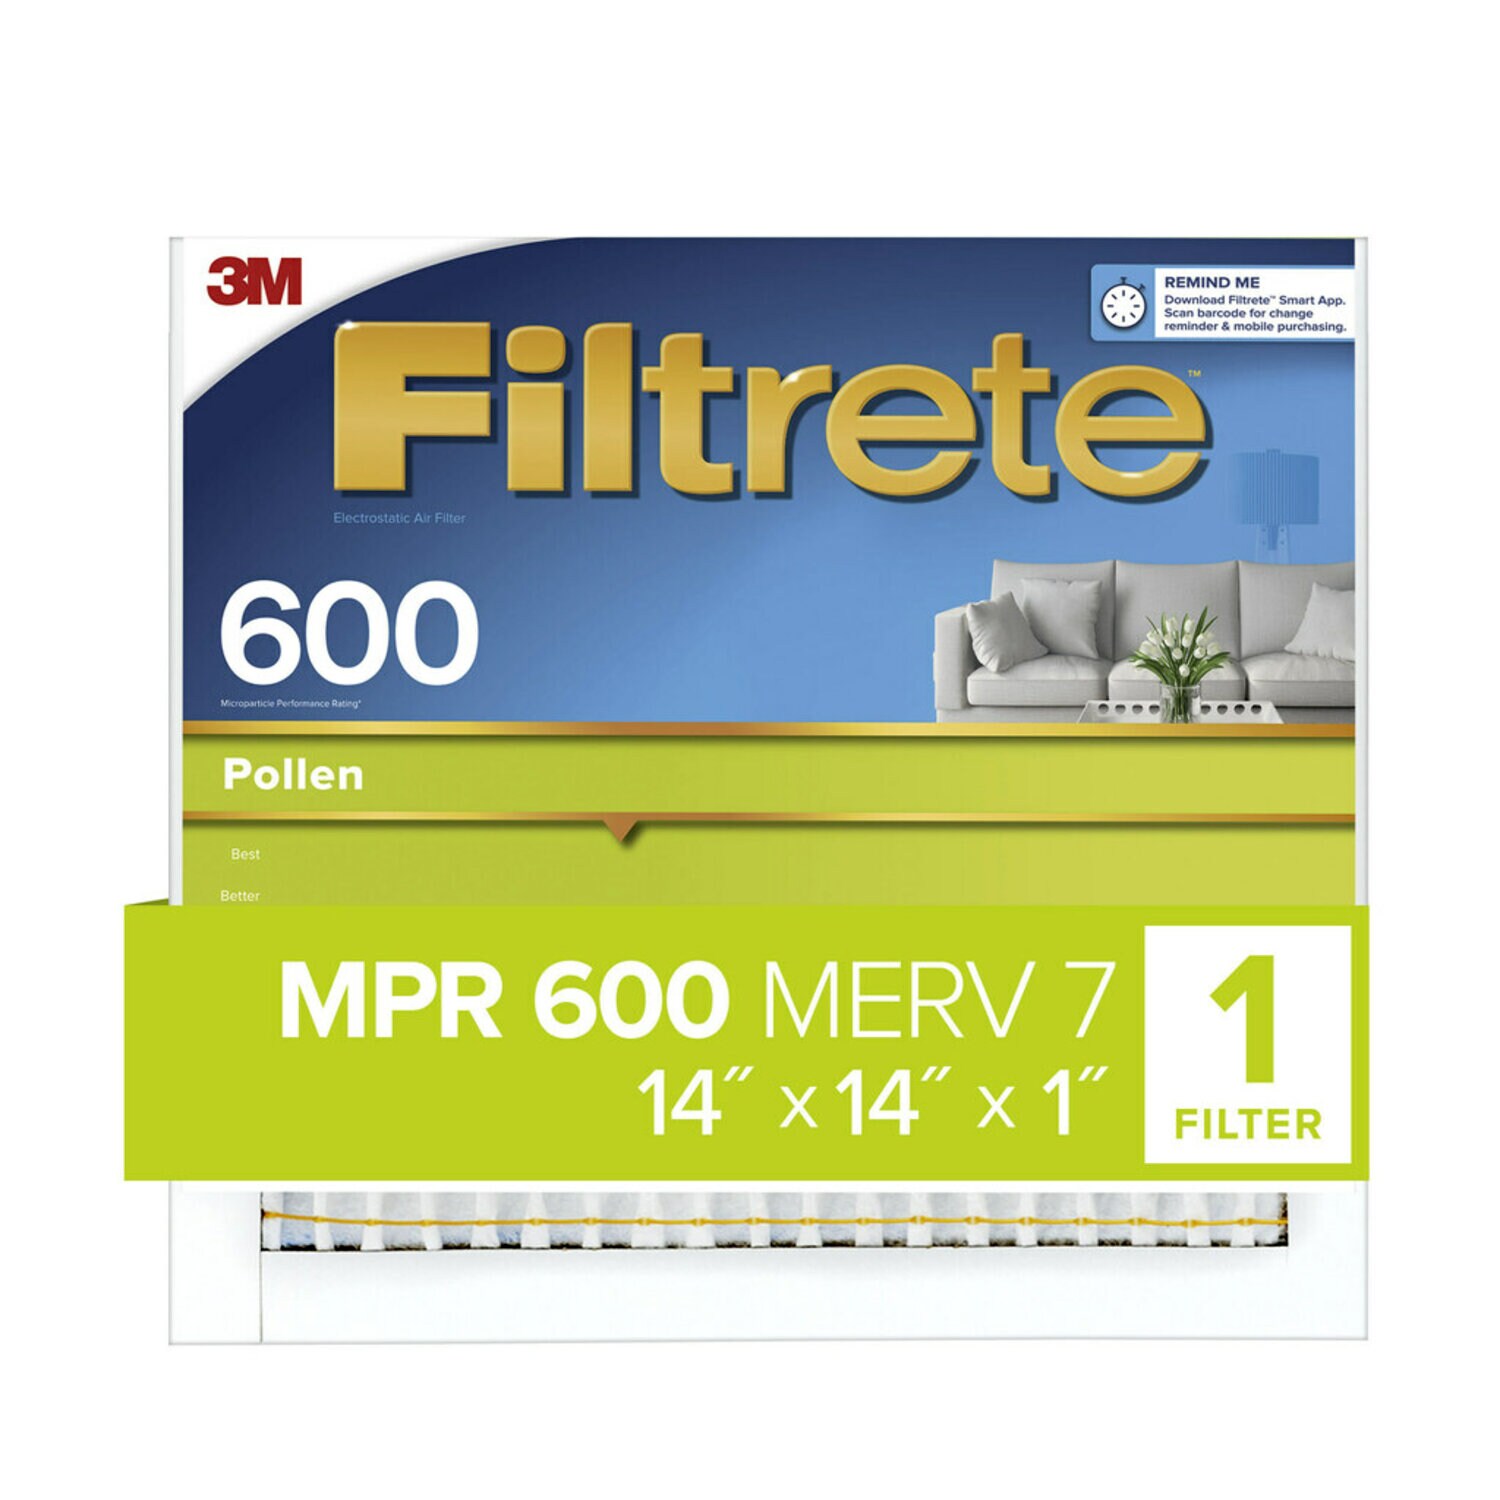 7100268552 - Filtrete Electrostatic Air Filter 600 MPR 9881DC-4, 14 in x 14 in x 1 in (35.5 cm x 35.5 cm x 2.5cm)